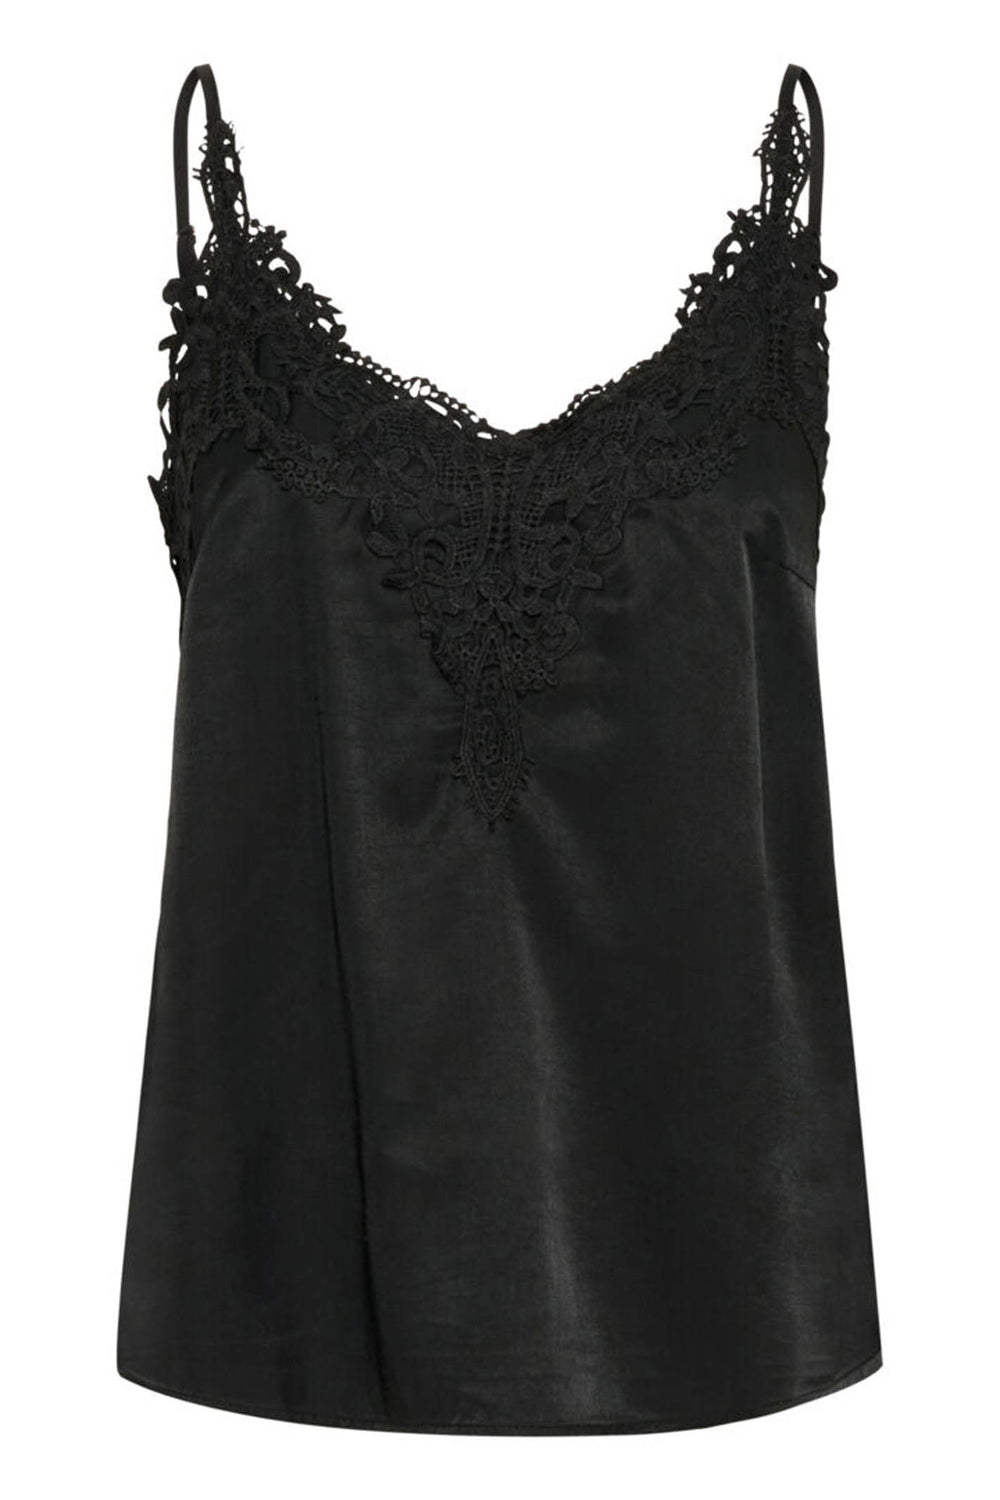 Cream CRanna black camisole lace top with straps dotique boutique chesterfield 1 2